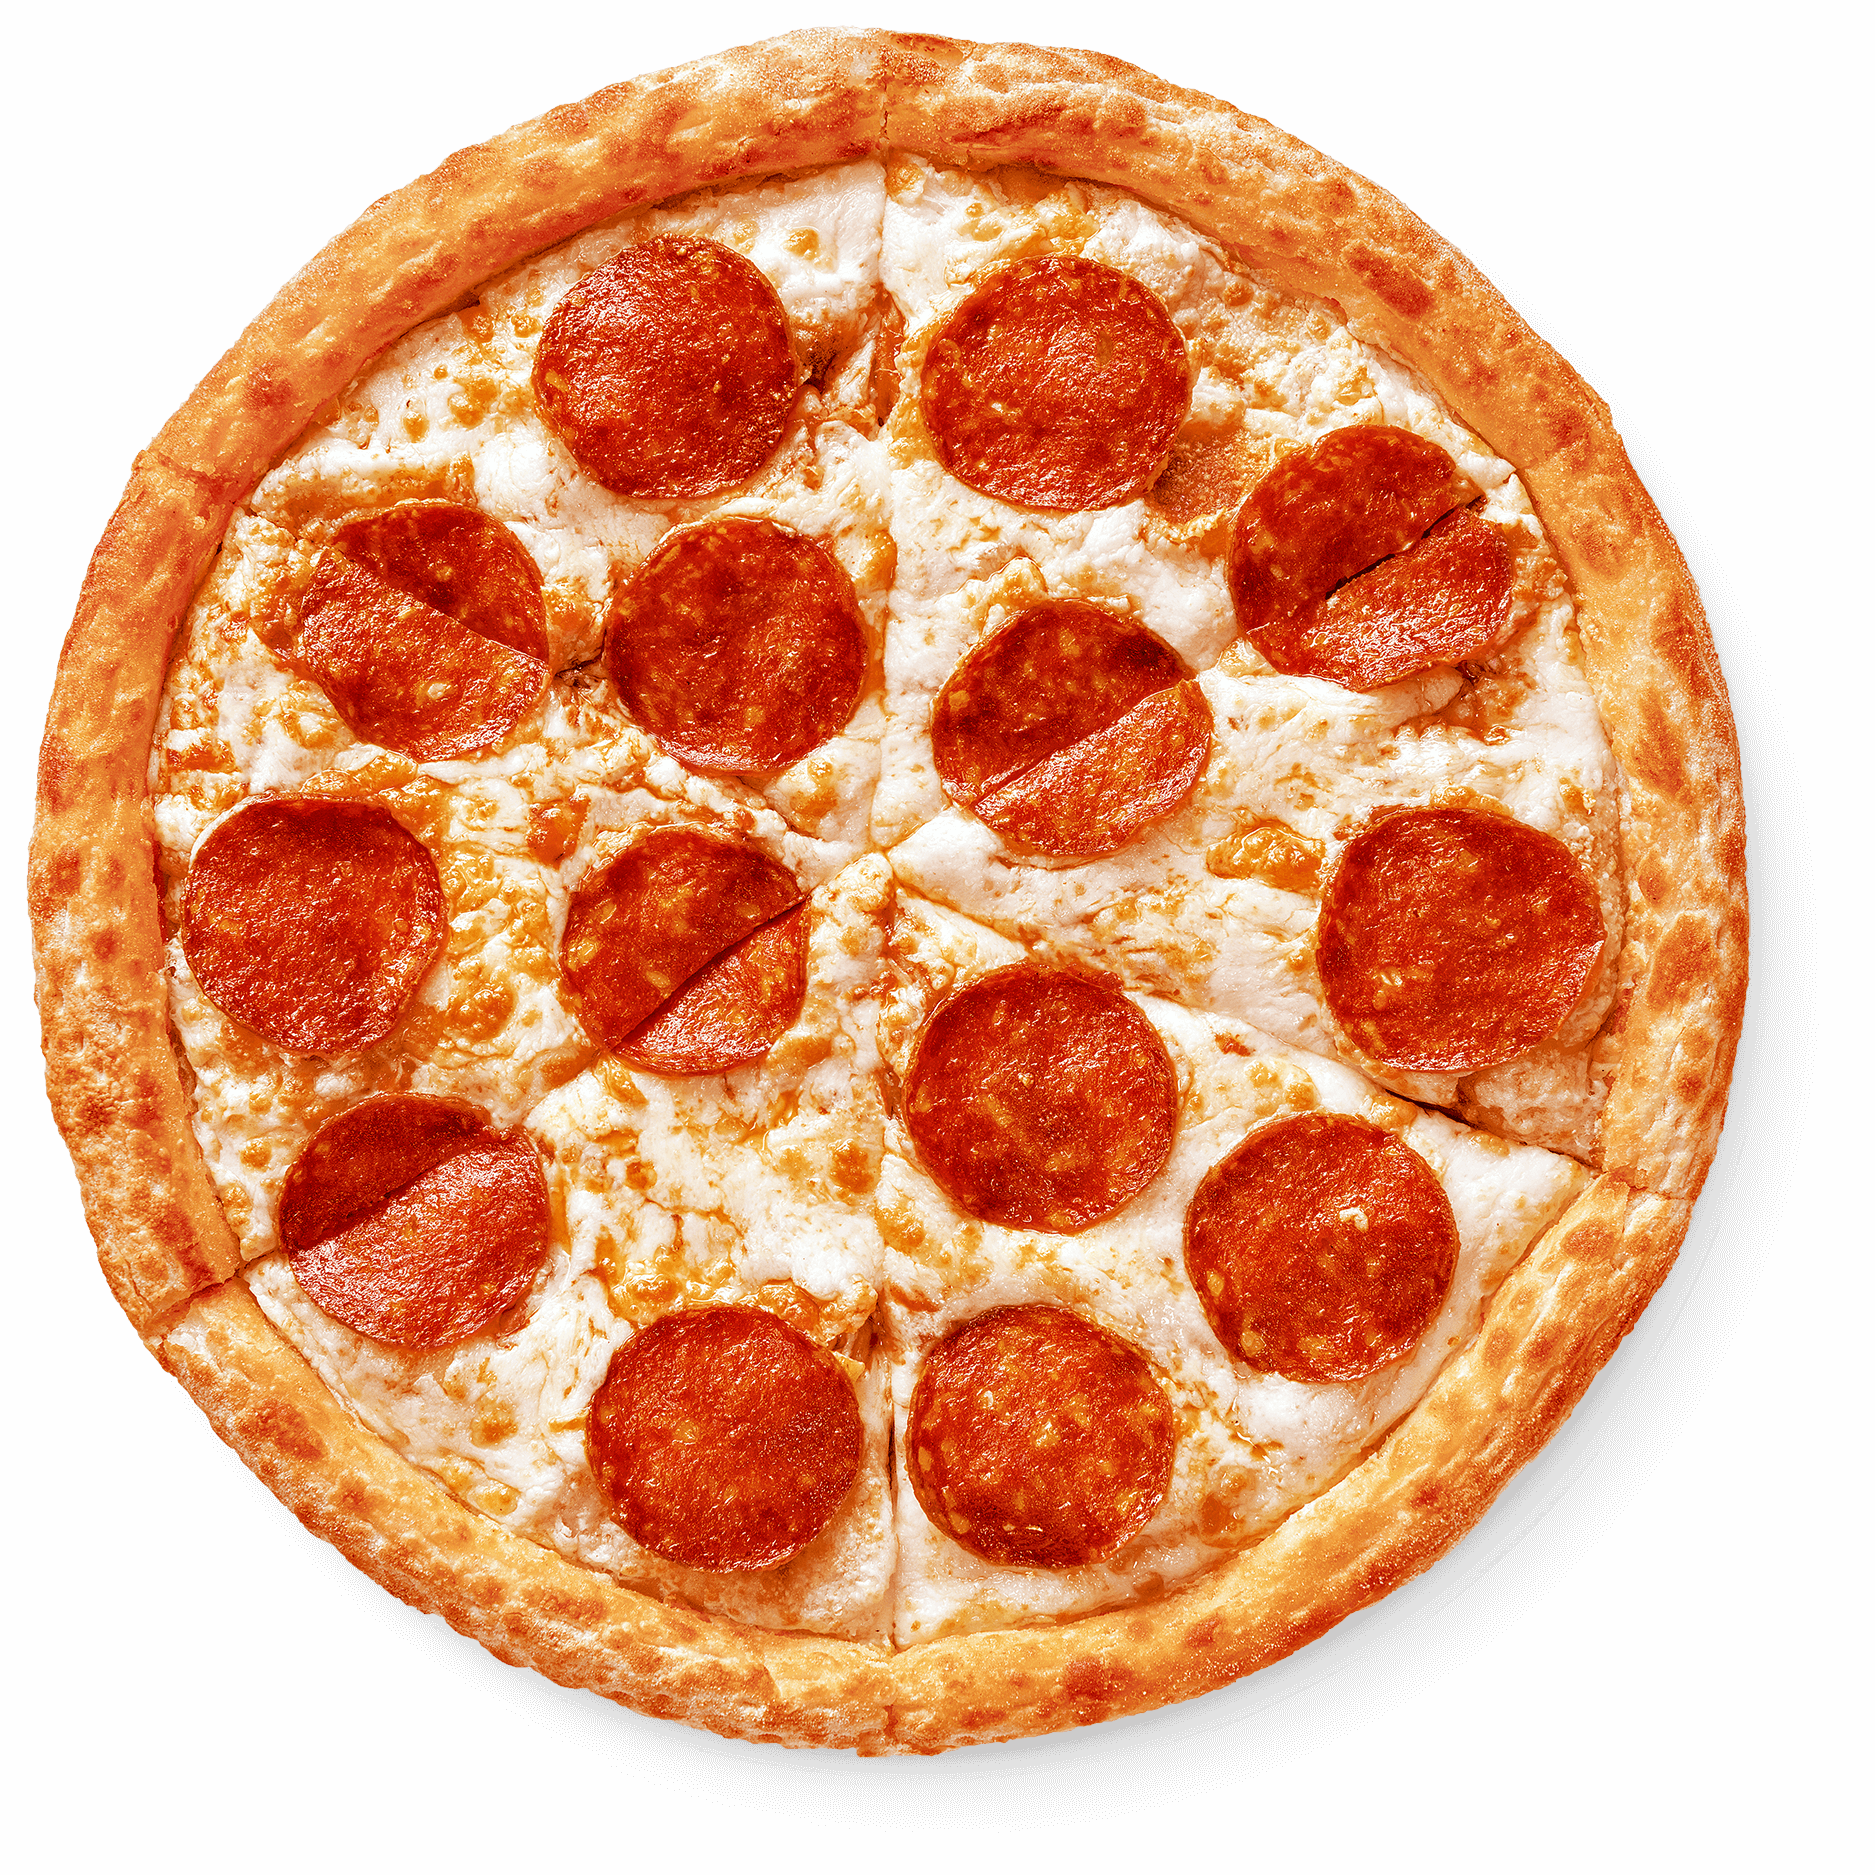 сколько стоит пепперони в додо пицце фото 93